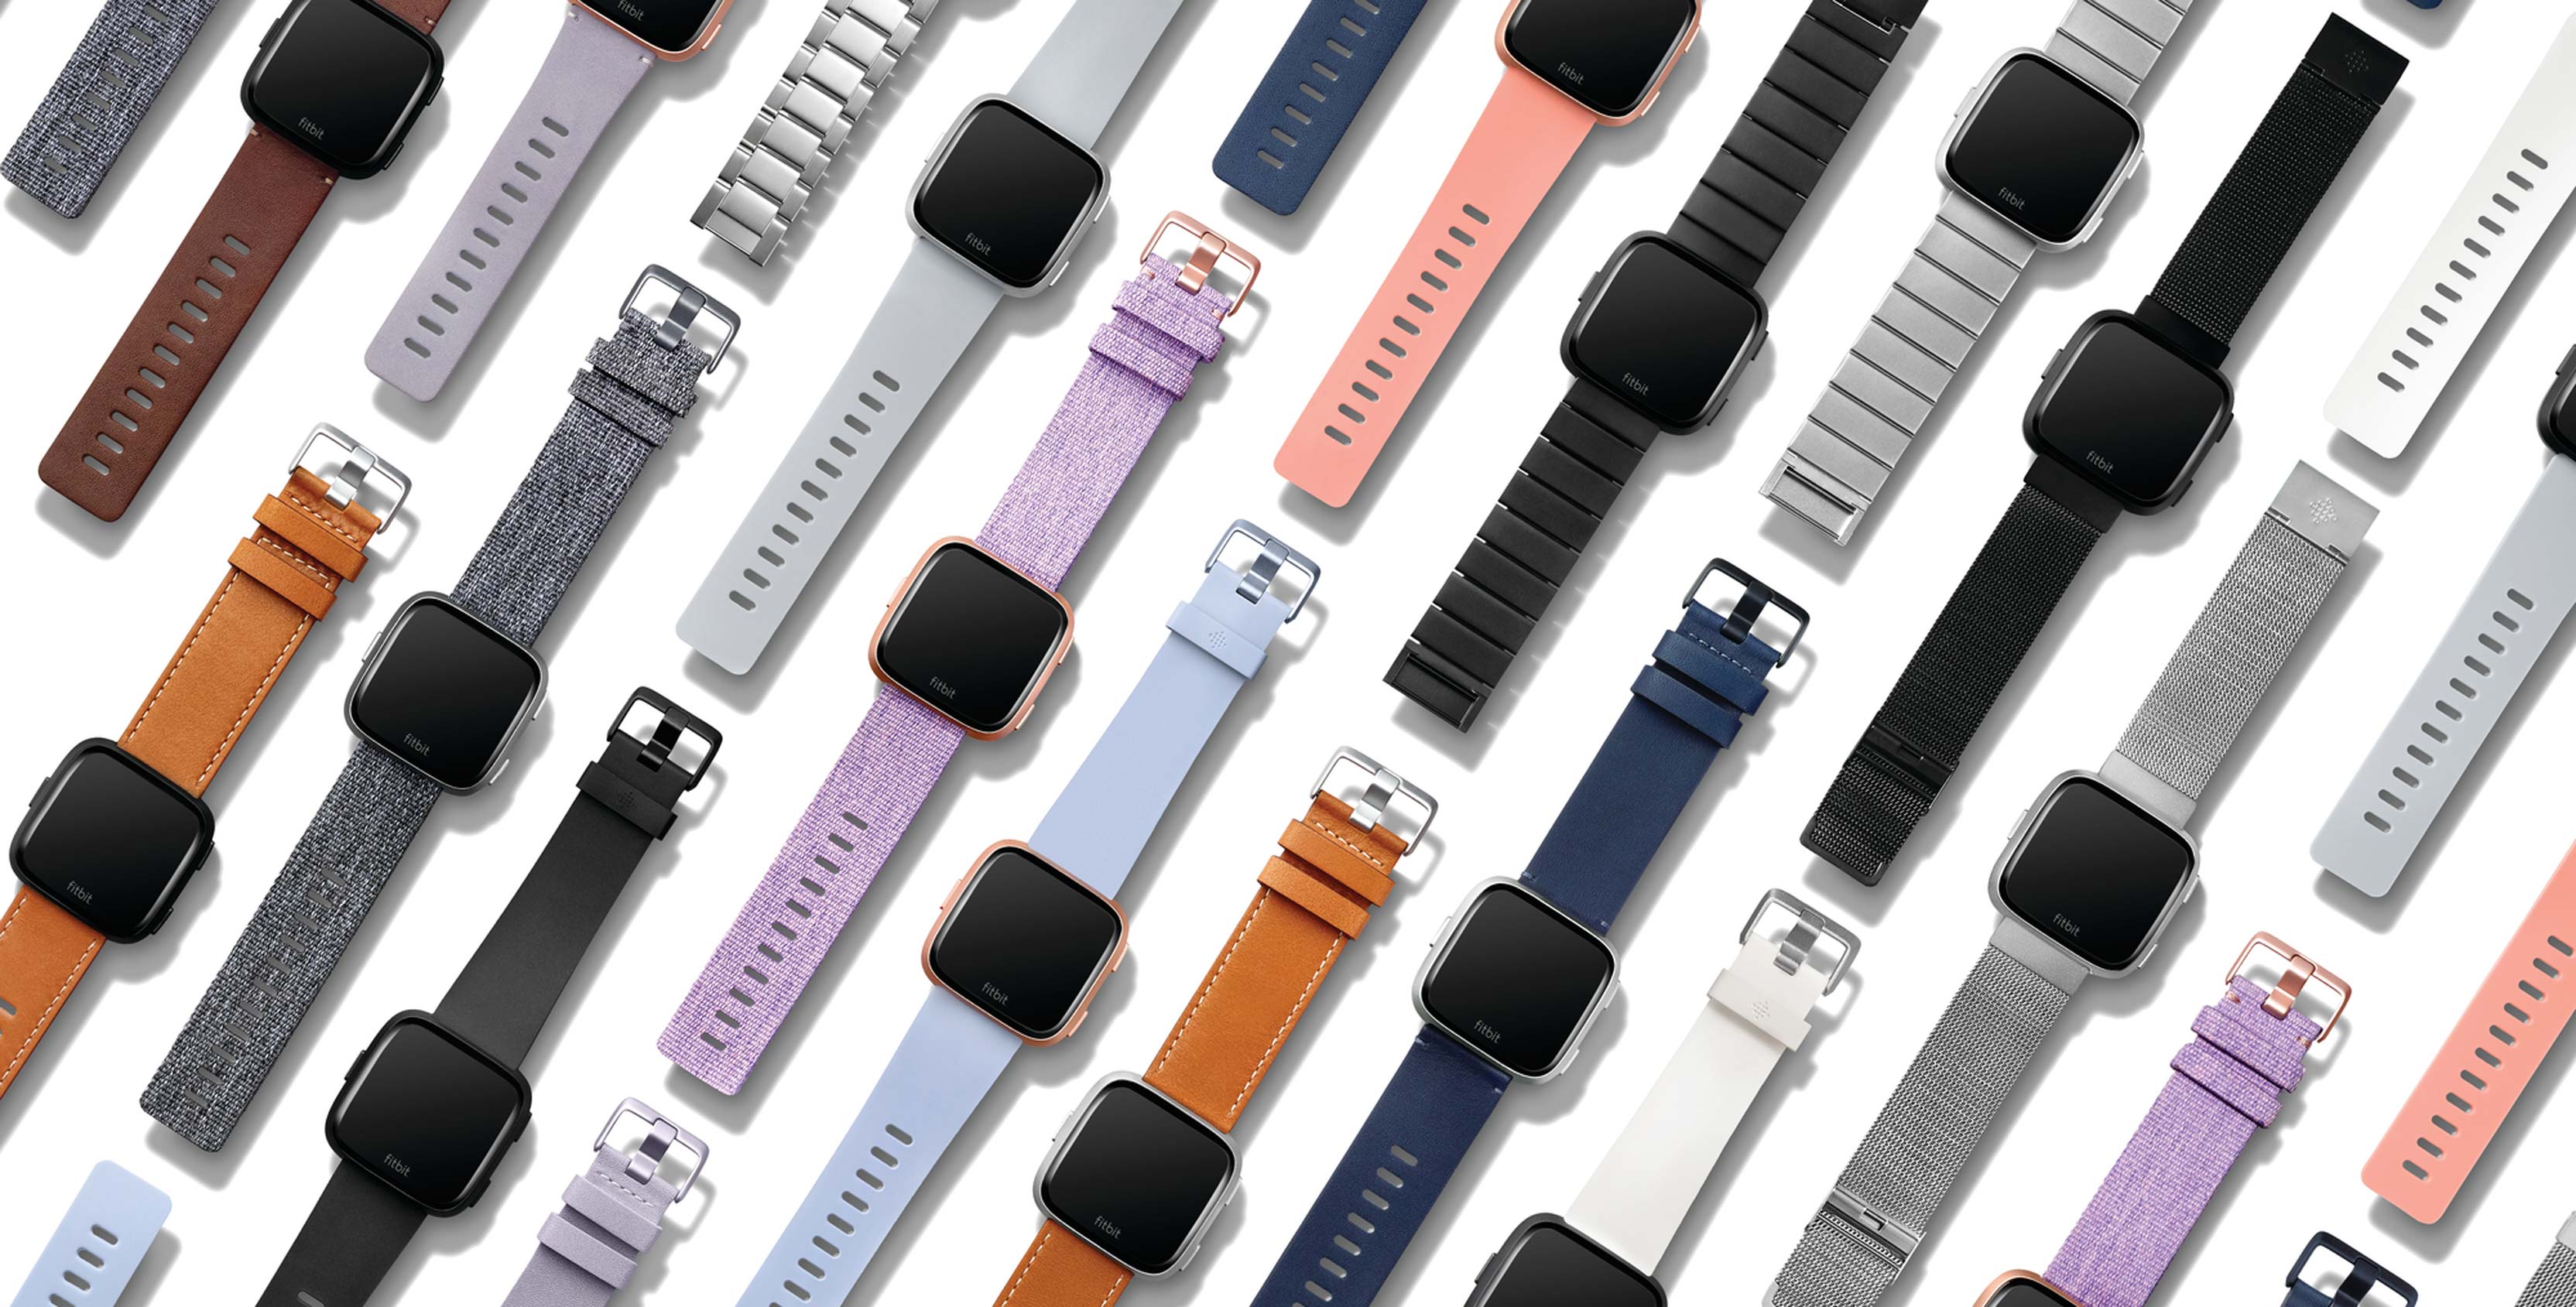 Fitbit's new Versa smartwatch family